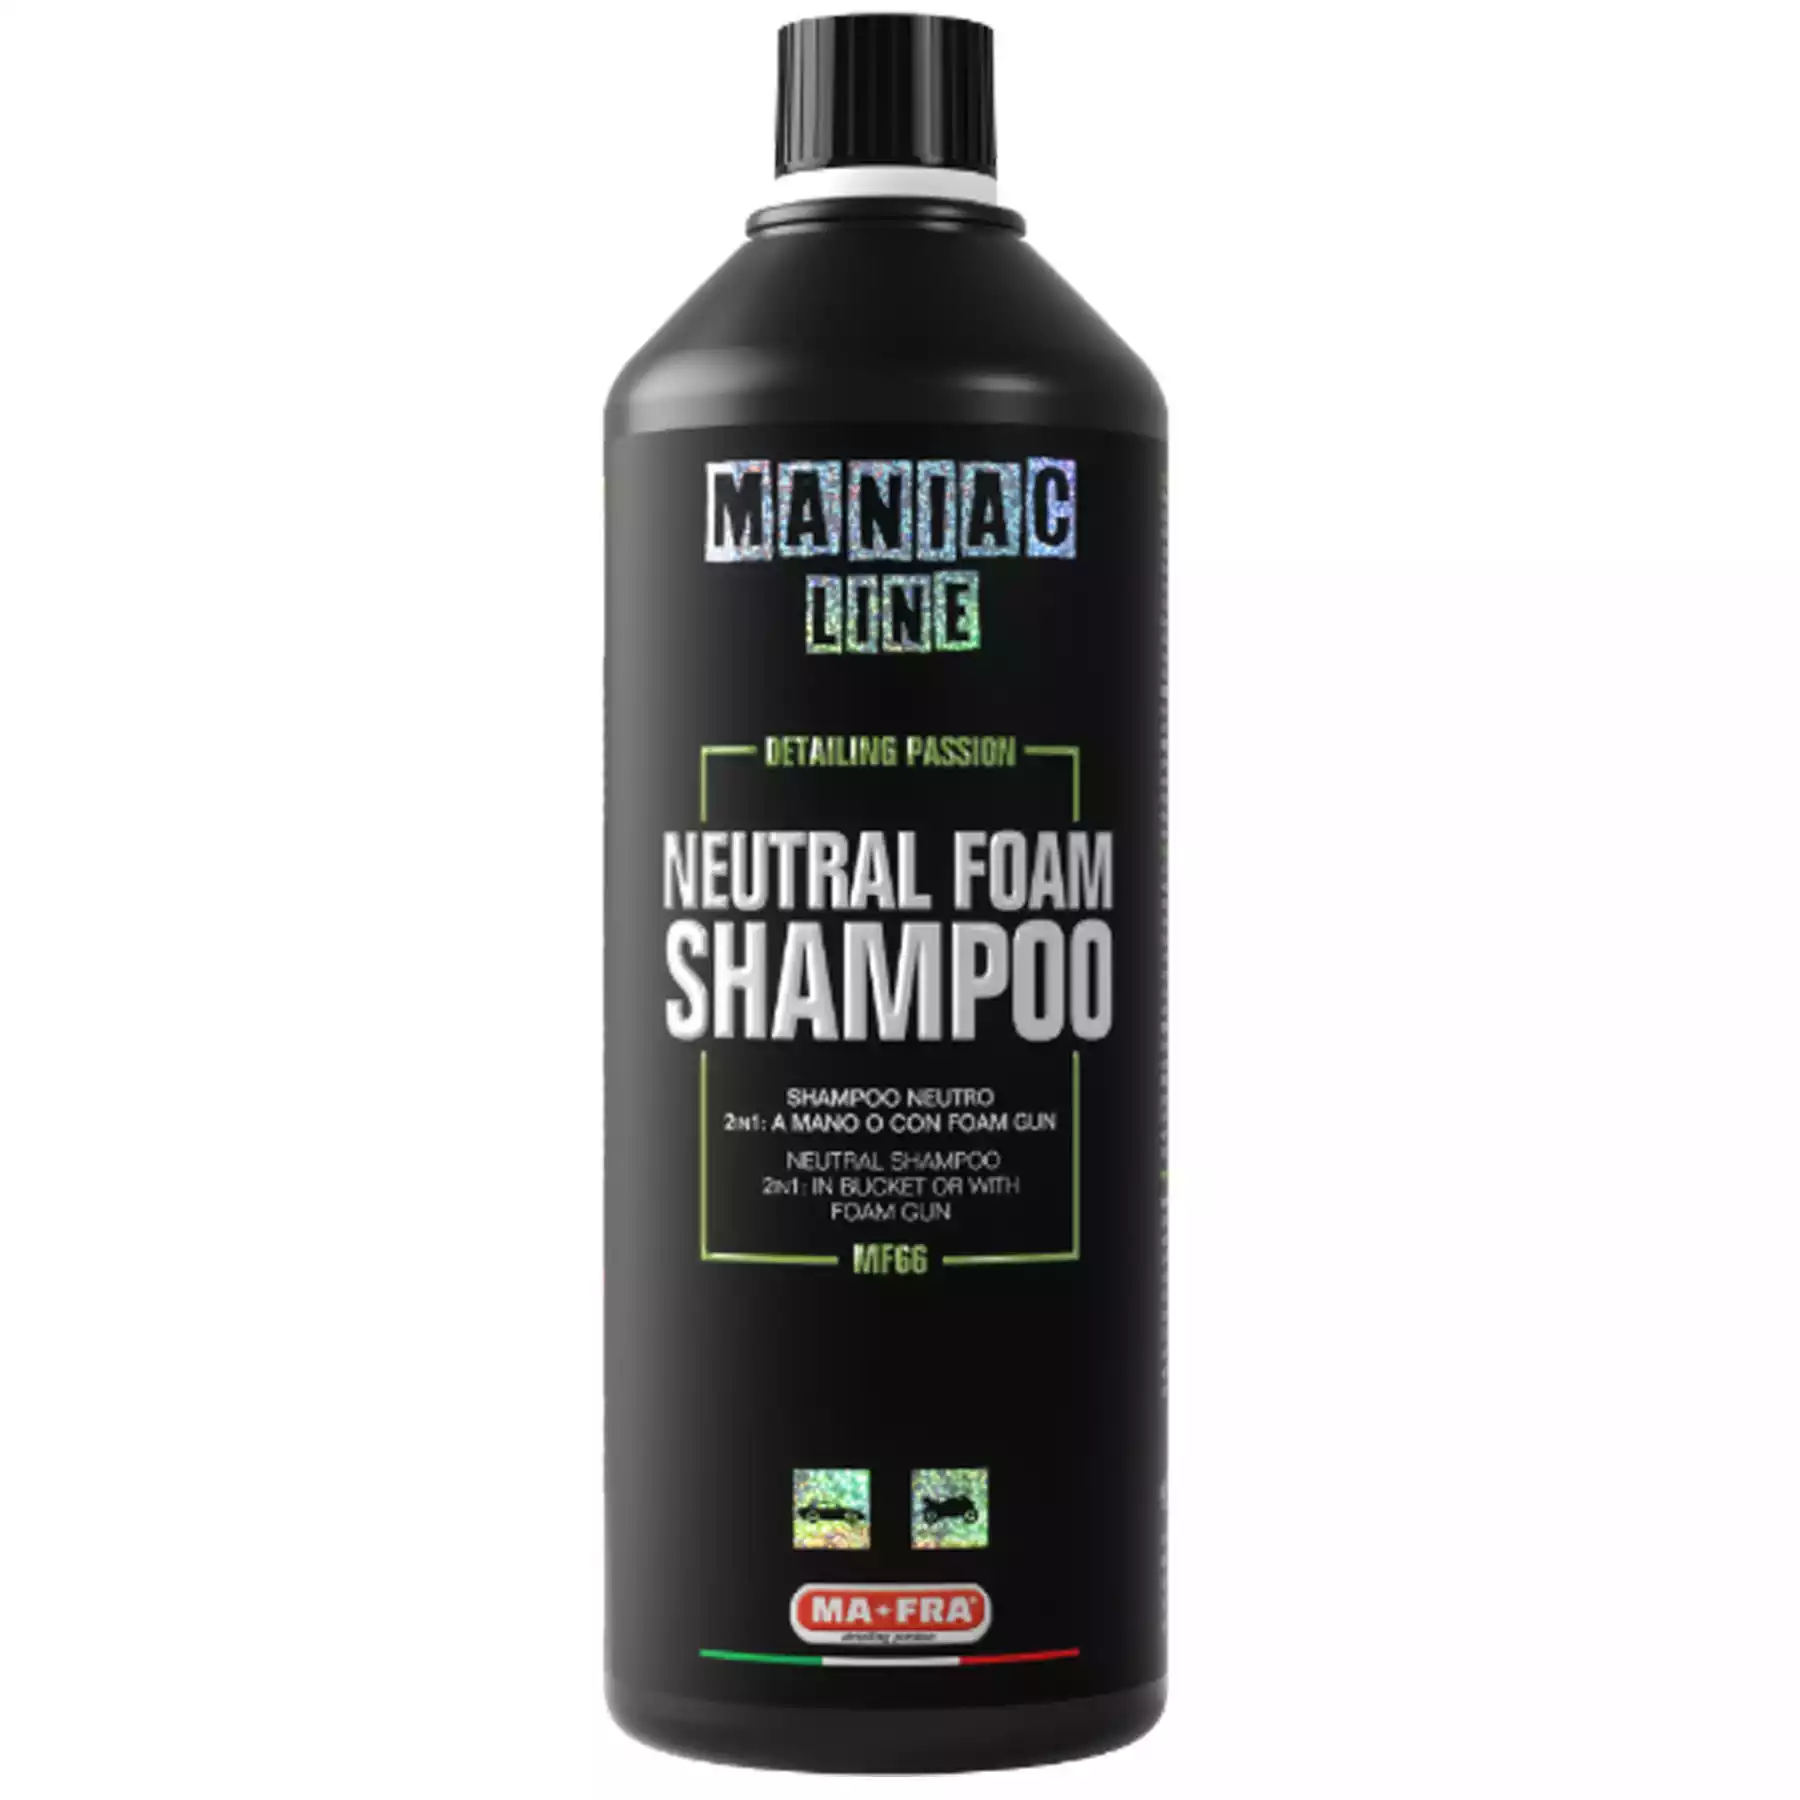 MF66 Neutral Foam Shampoo